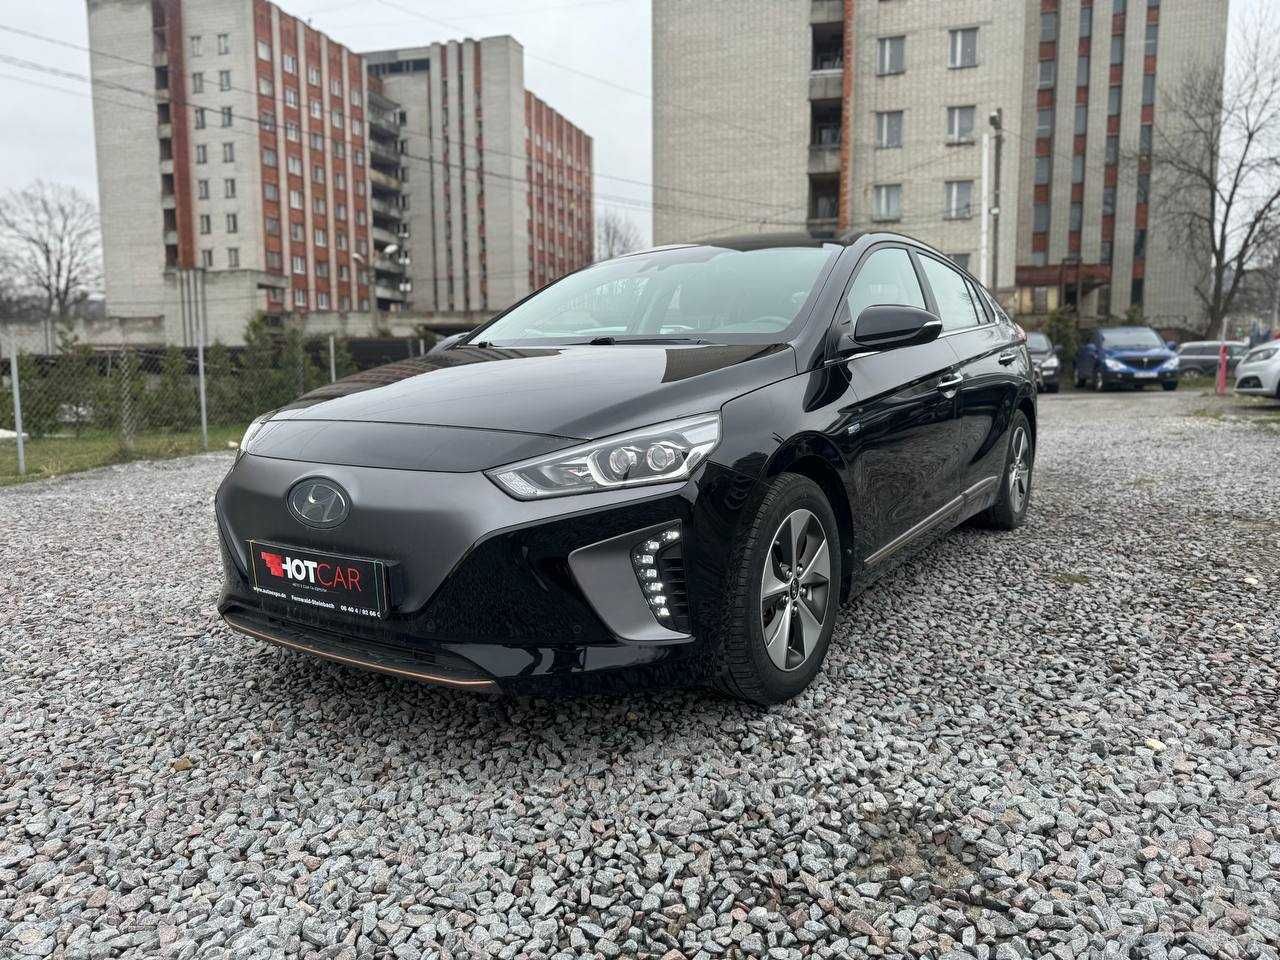 Hyundai Ioniq Electric 2019